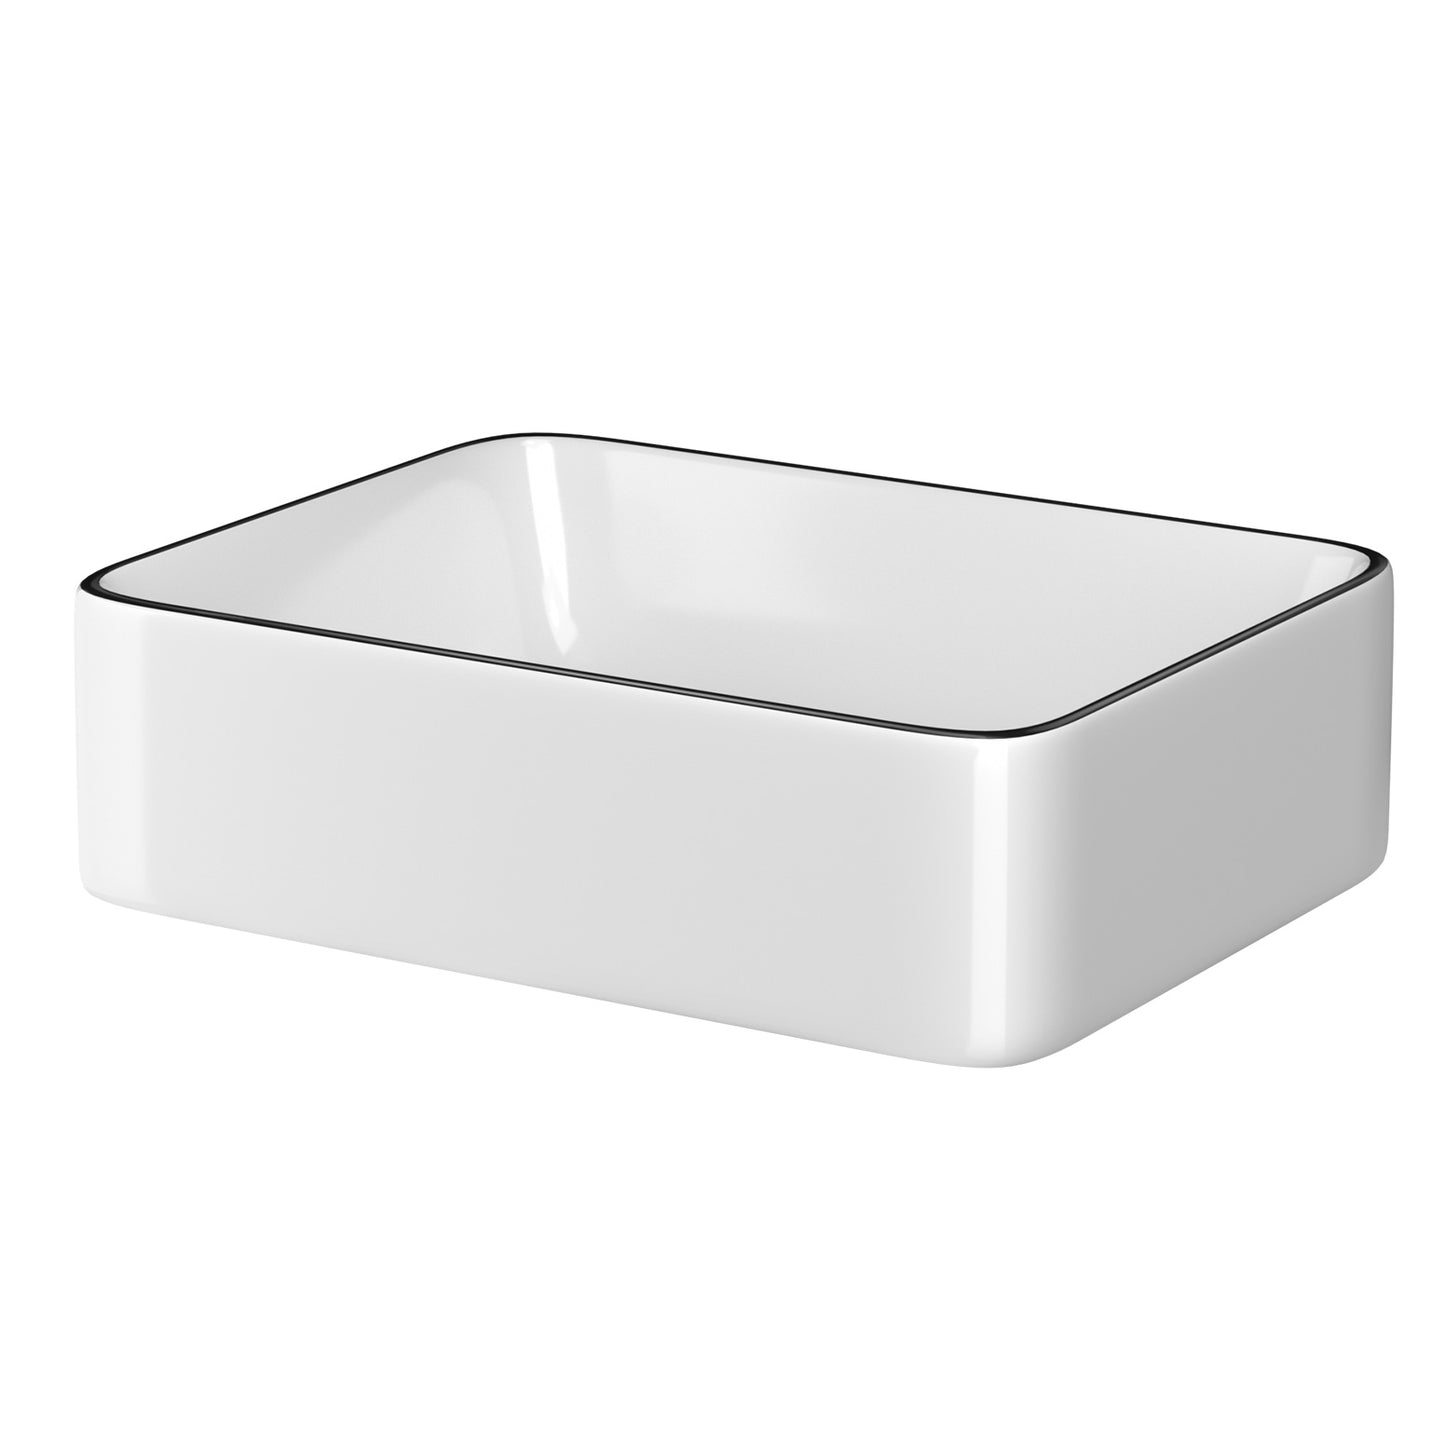 Cefito Bathroom Basin Ceramic Vanity Sink Hand Wash Bowl Above Counter 48x37cm